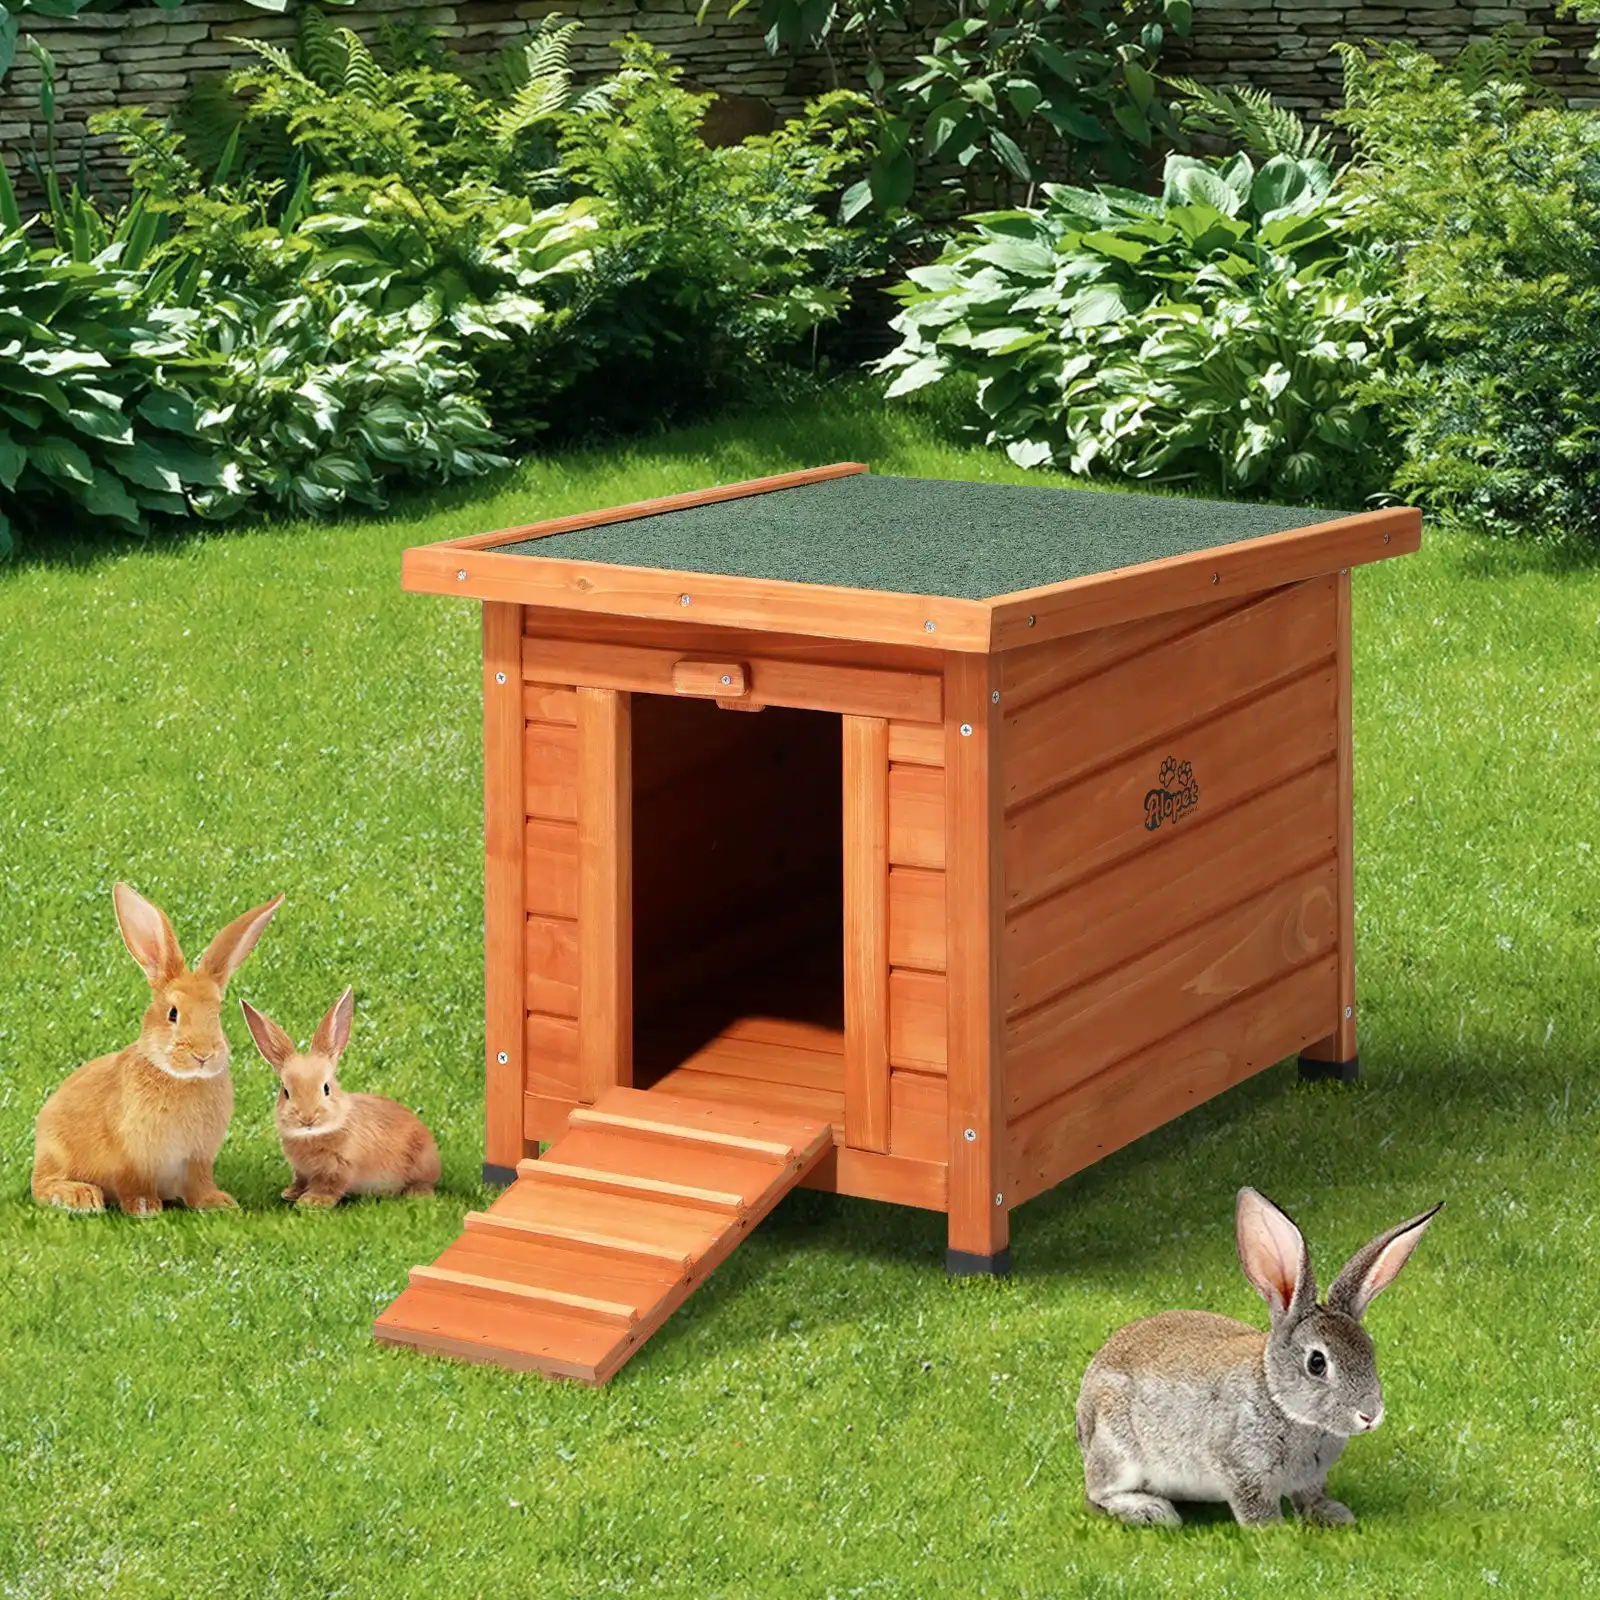 Alopet Cube Rabbit Hutch Wooden Cage Chicken Coop House Enclosure Outdoor/Indoor